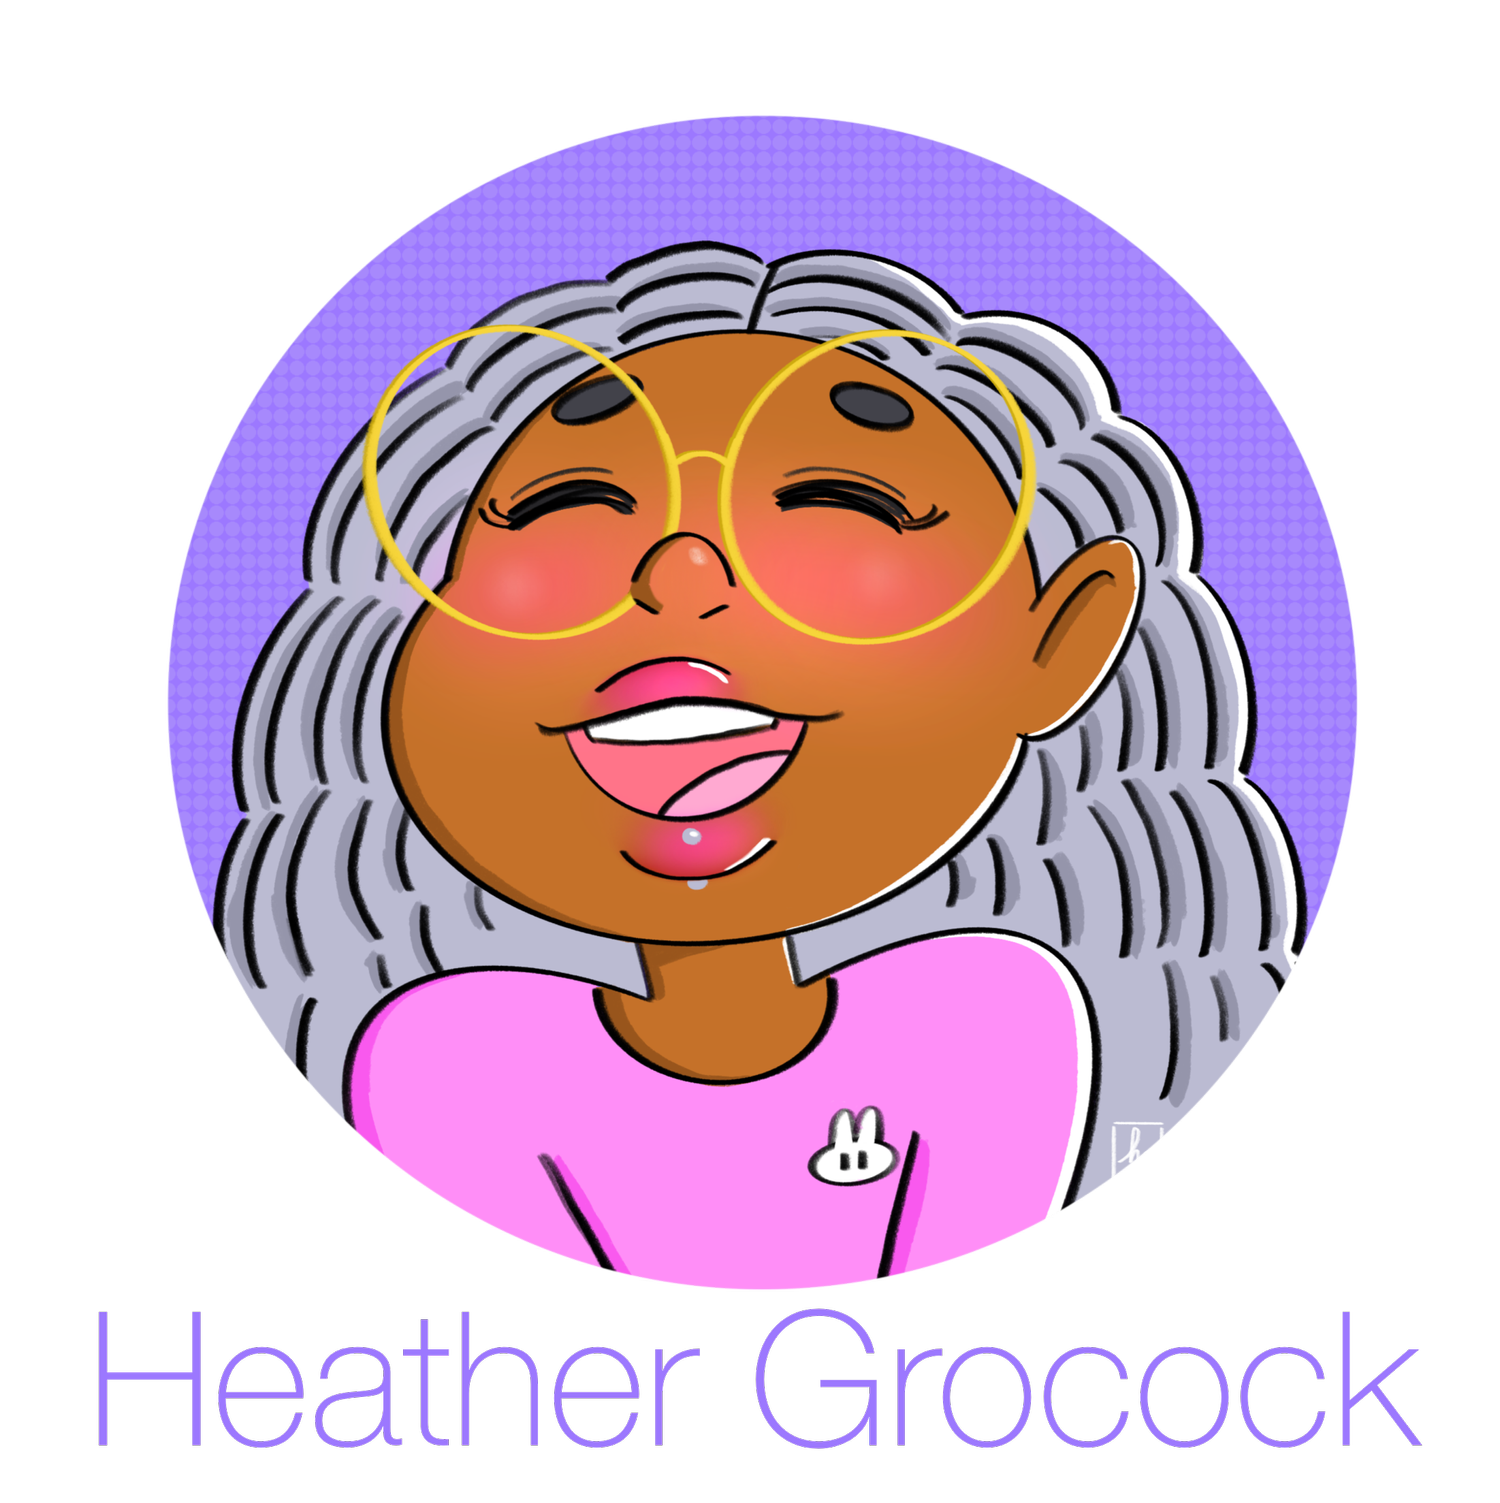 Heather Grocock